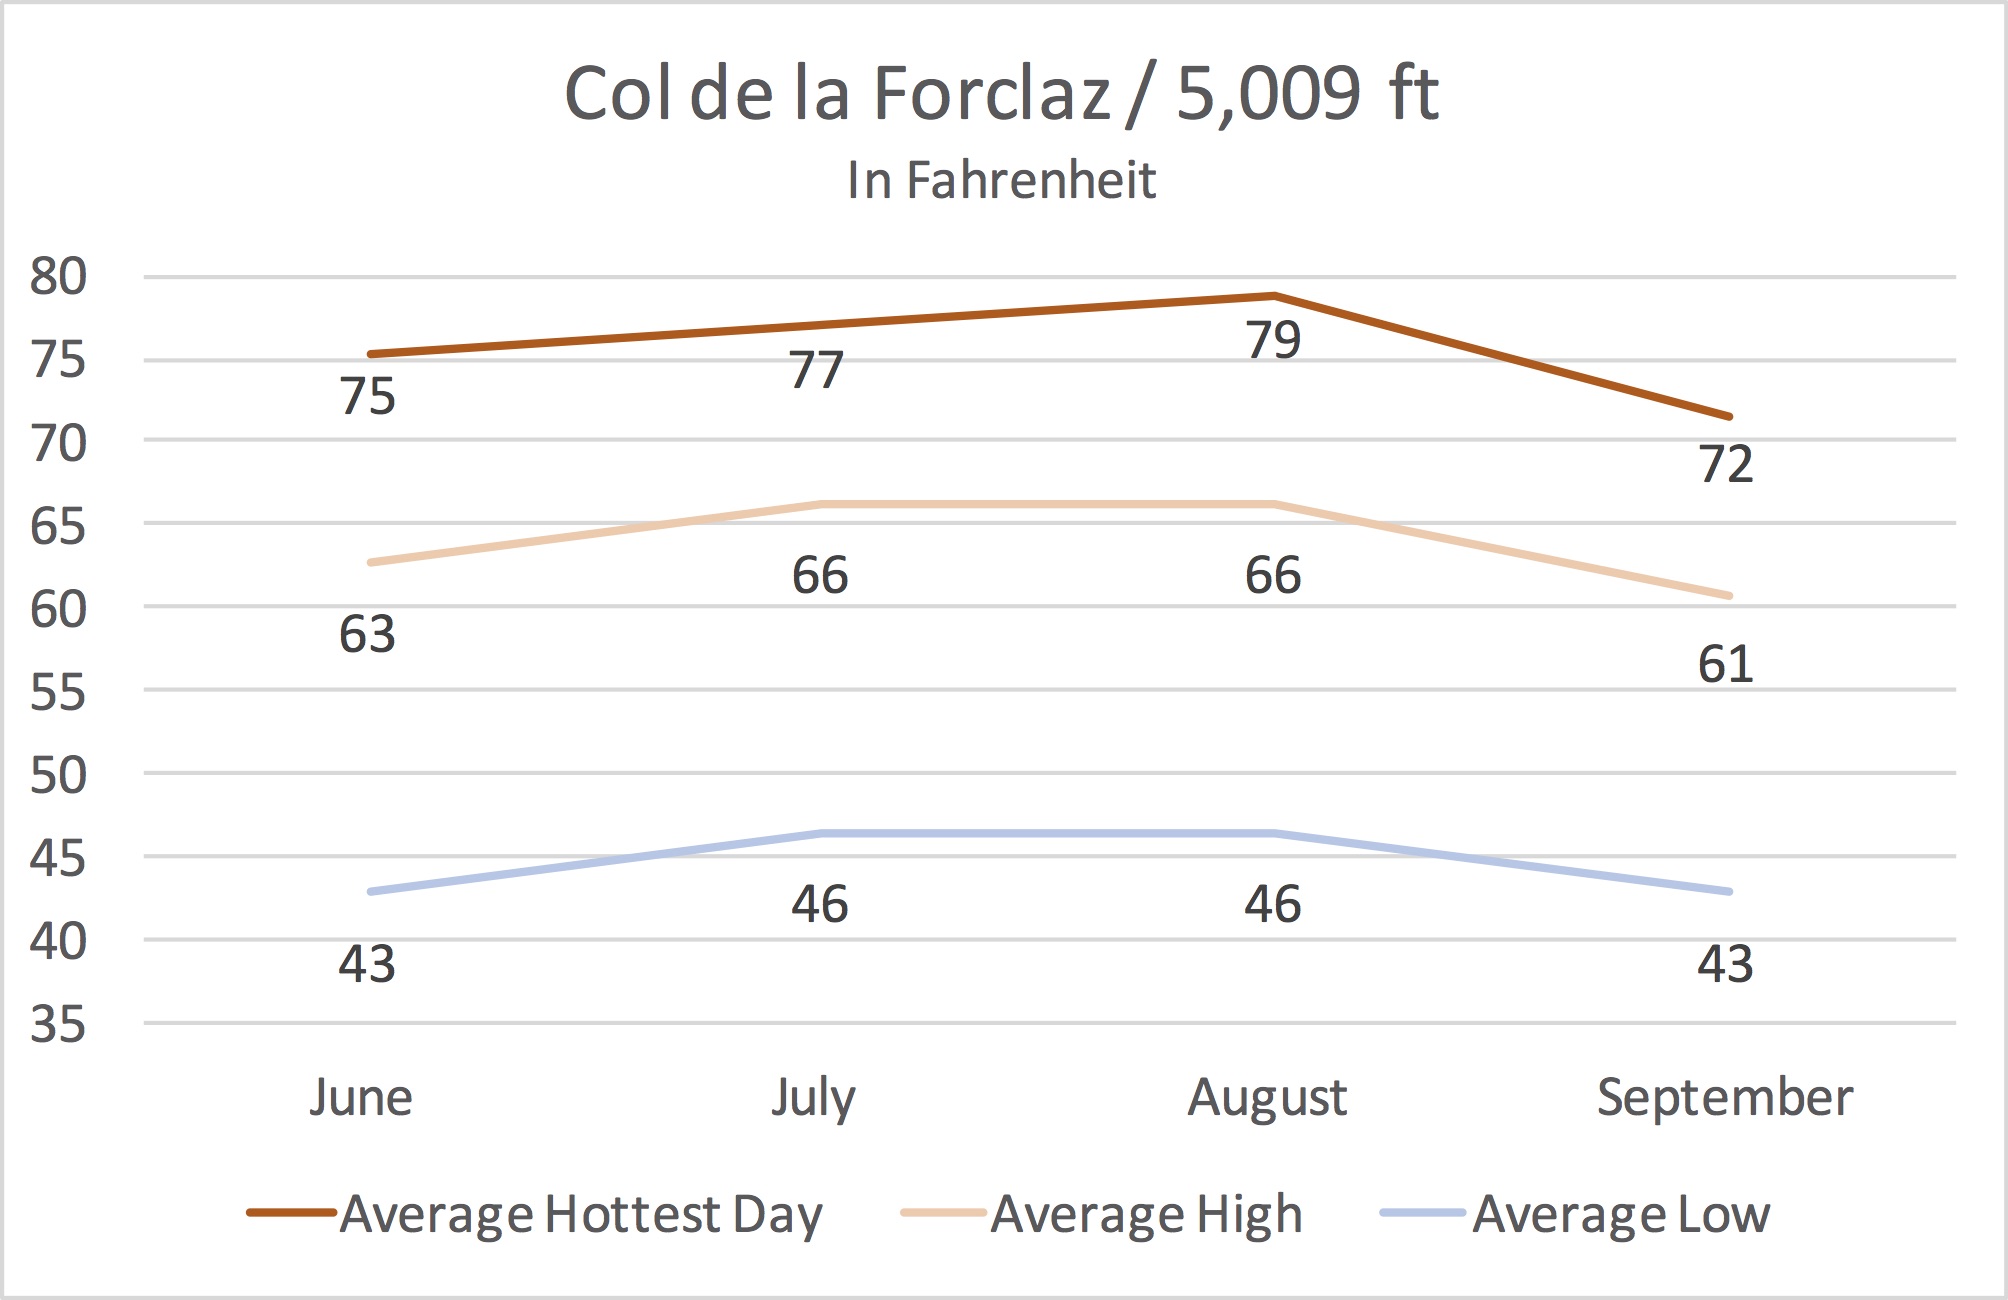 Col de la Forclaz Average Temperature from June to September